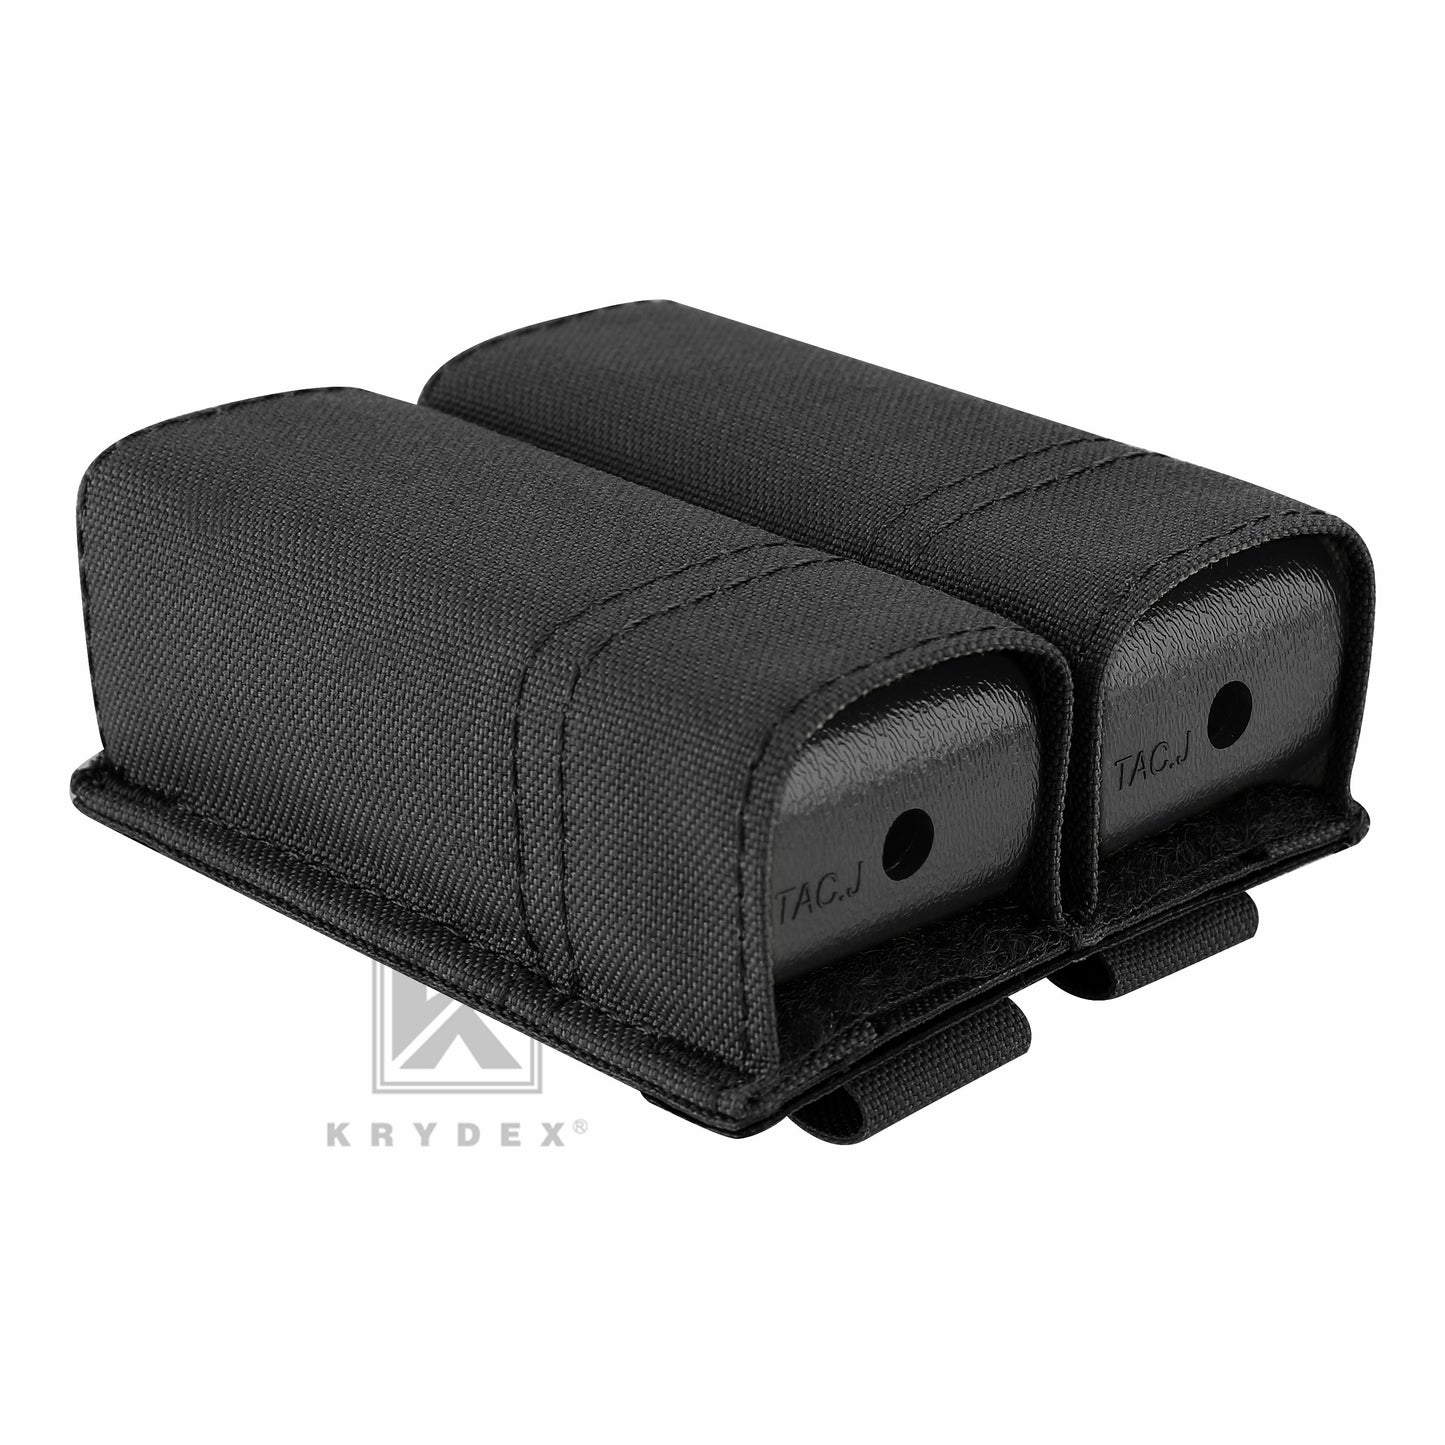 Krydex Tactical 9MM Pistol Magazine Pouch Double Stack .40 45 ACP Pistol Mag Holder Duty Belt & Molle Compatible